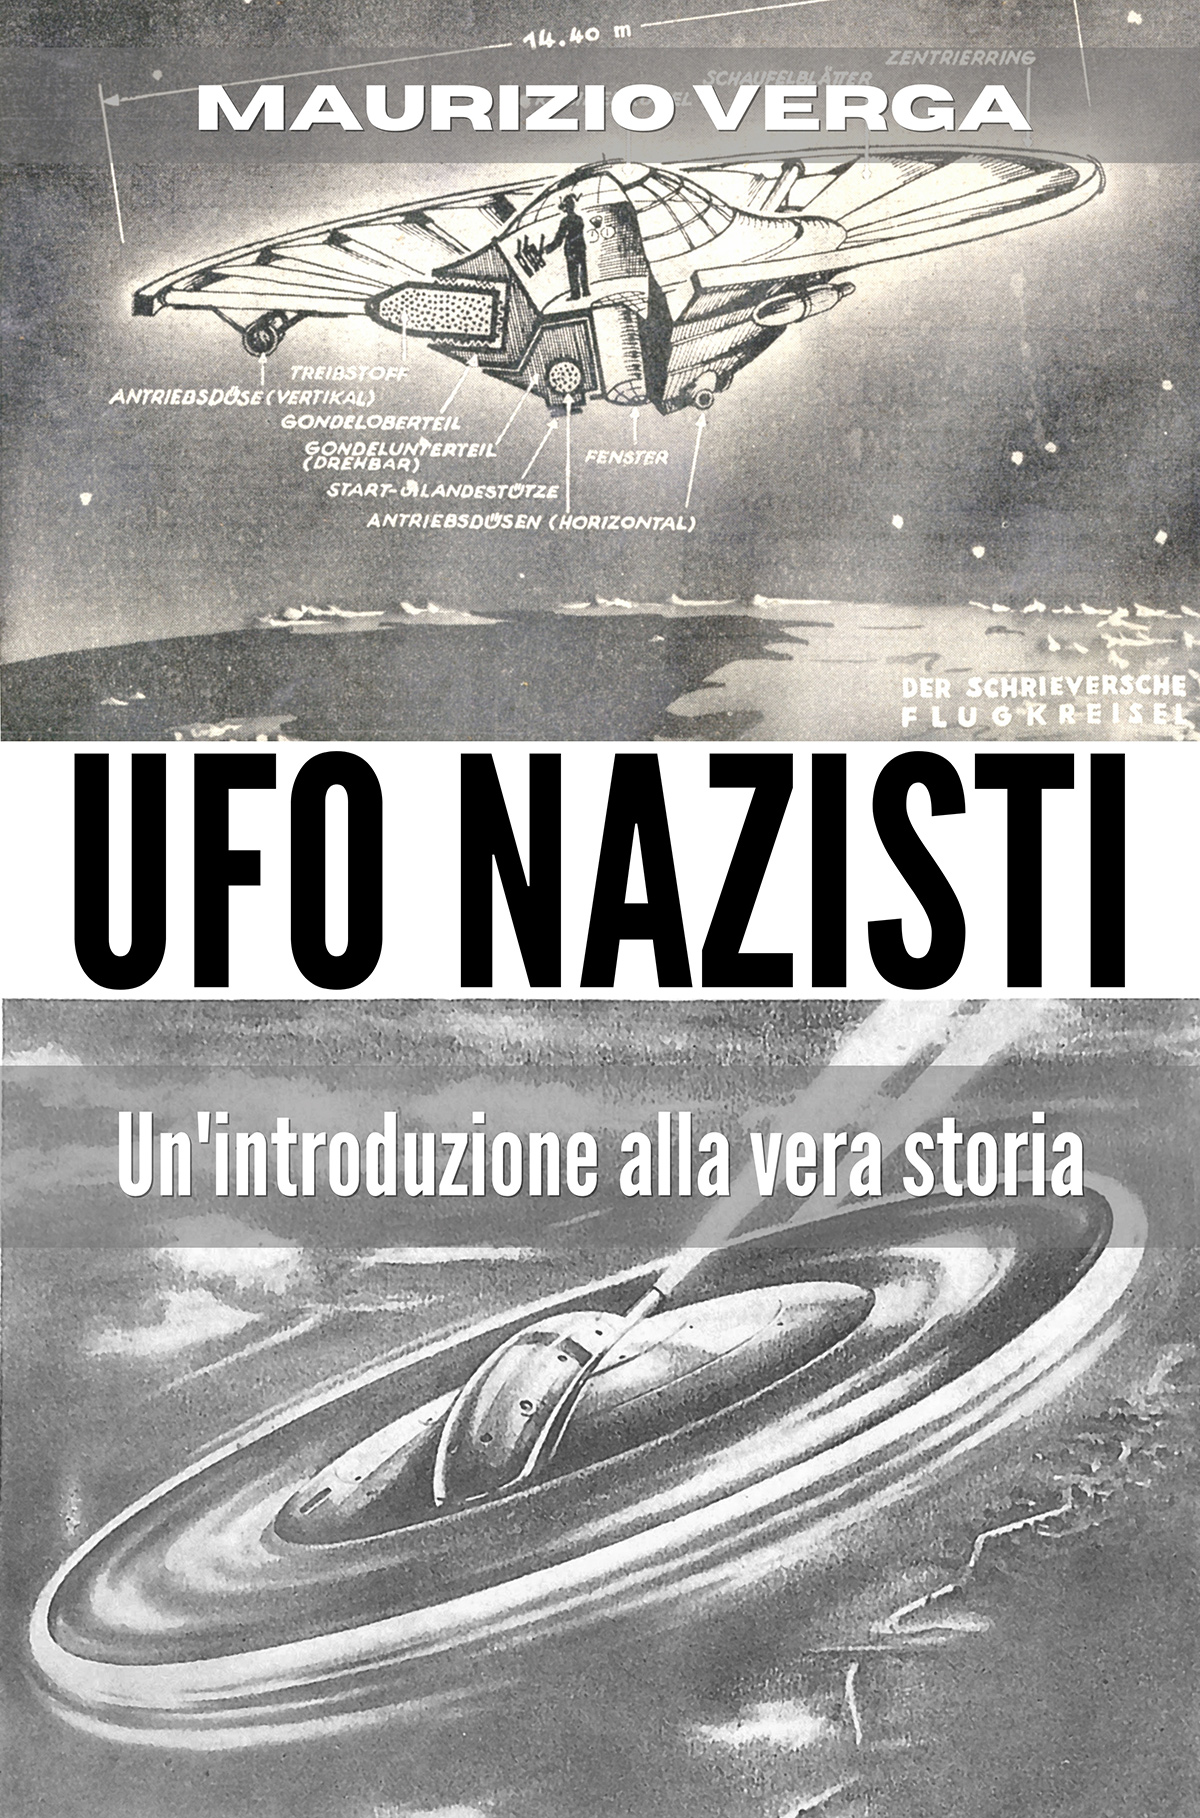 UFO nazisti: la vera storia